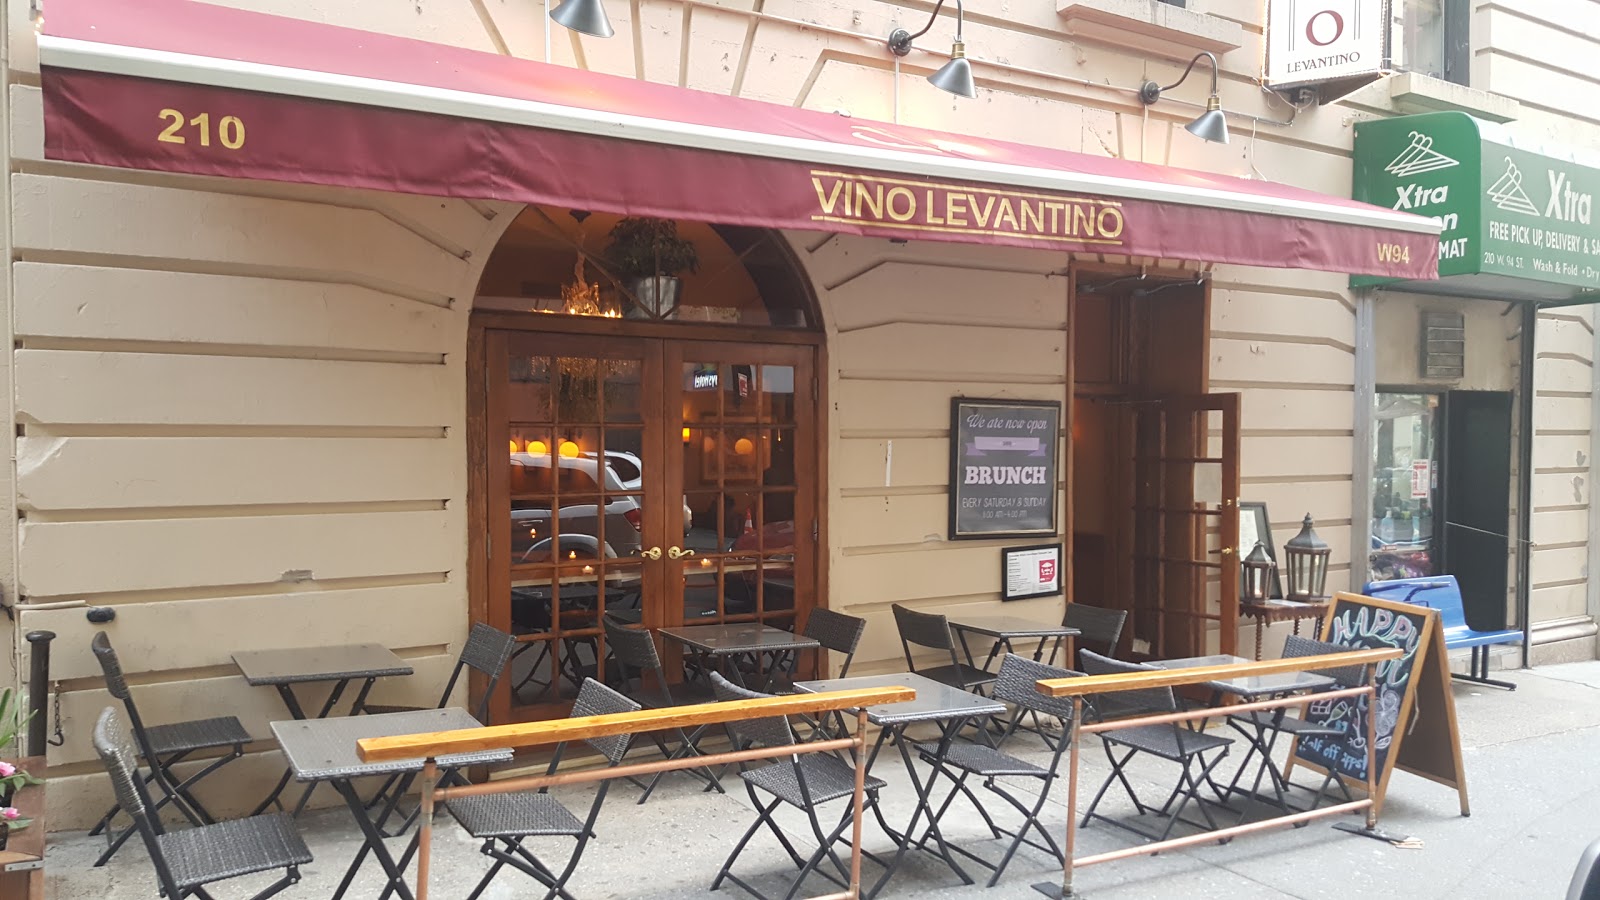 Photo of Vino Levantino in New York City, New York, United States - 1 Picture of Restaurant, Food, Point of interest, Establishment